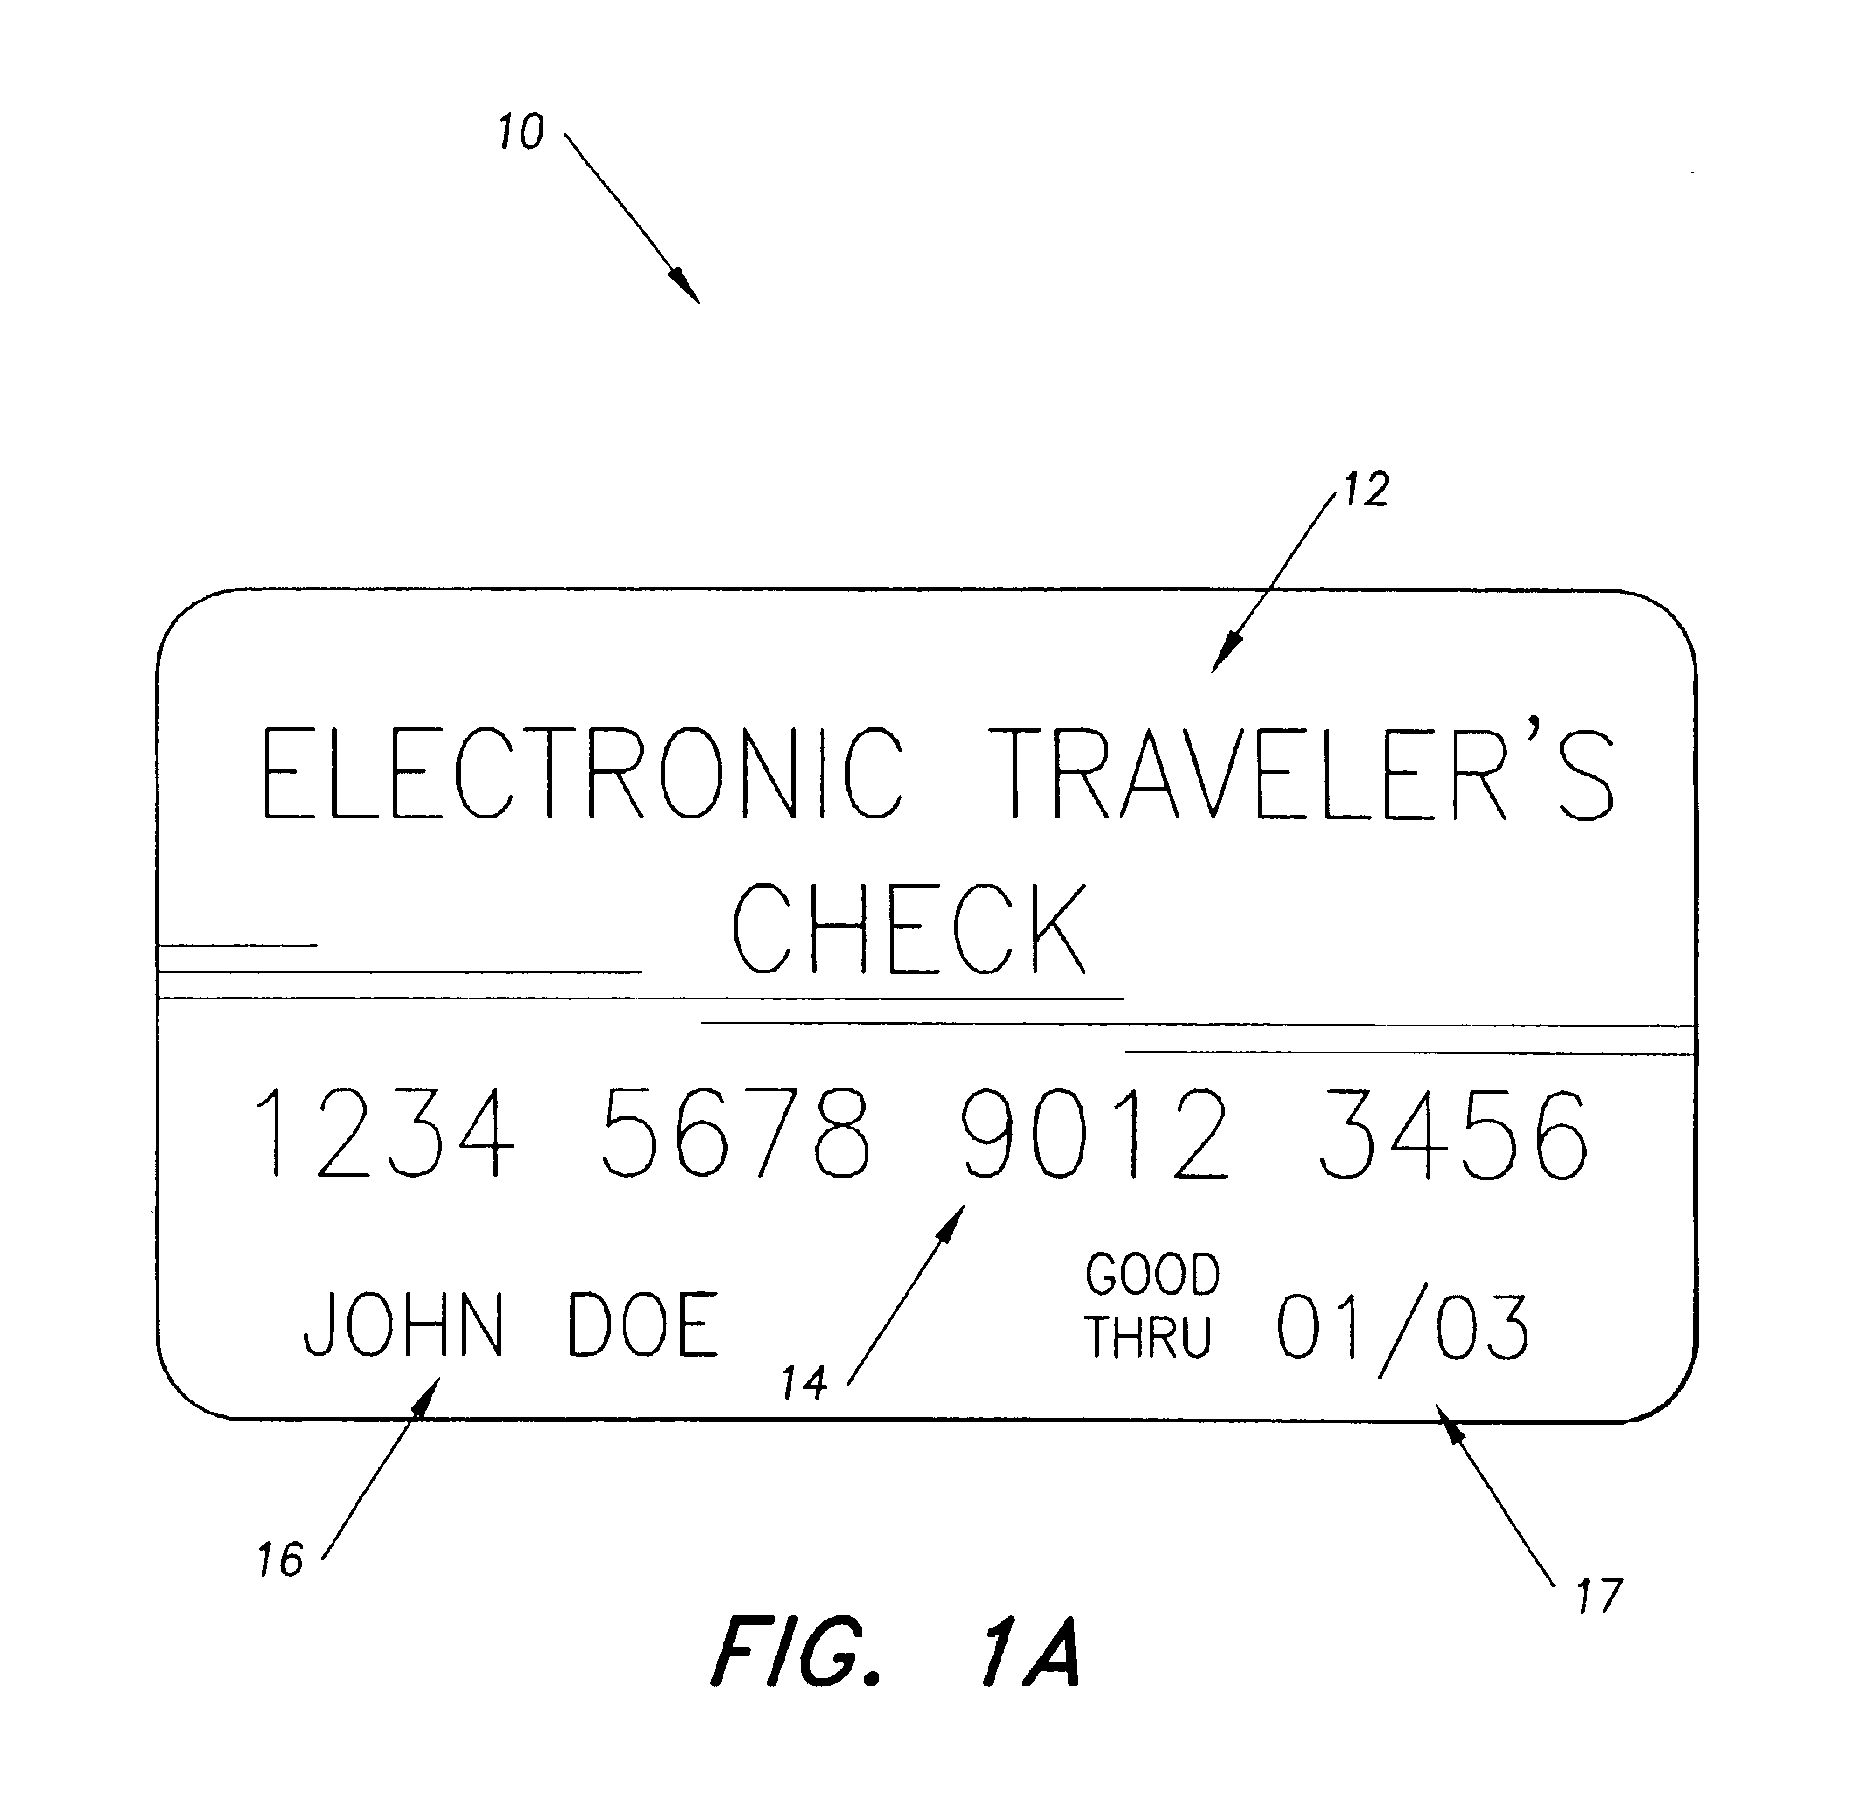 Electronic traveler's checks